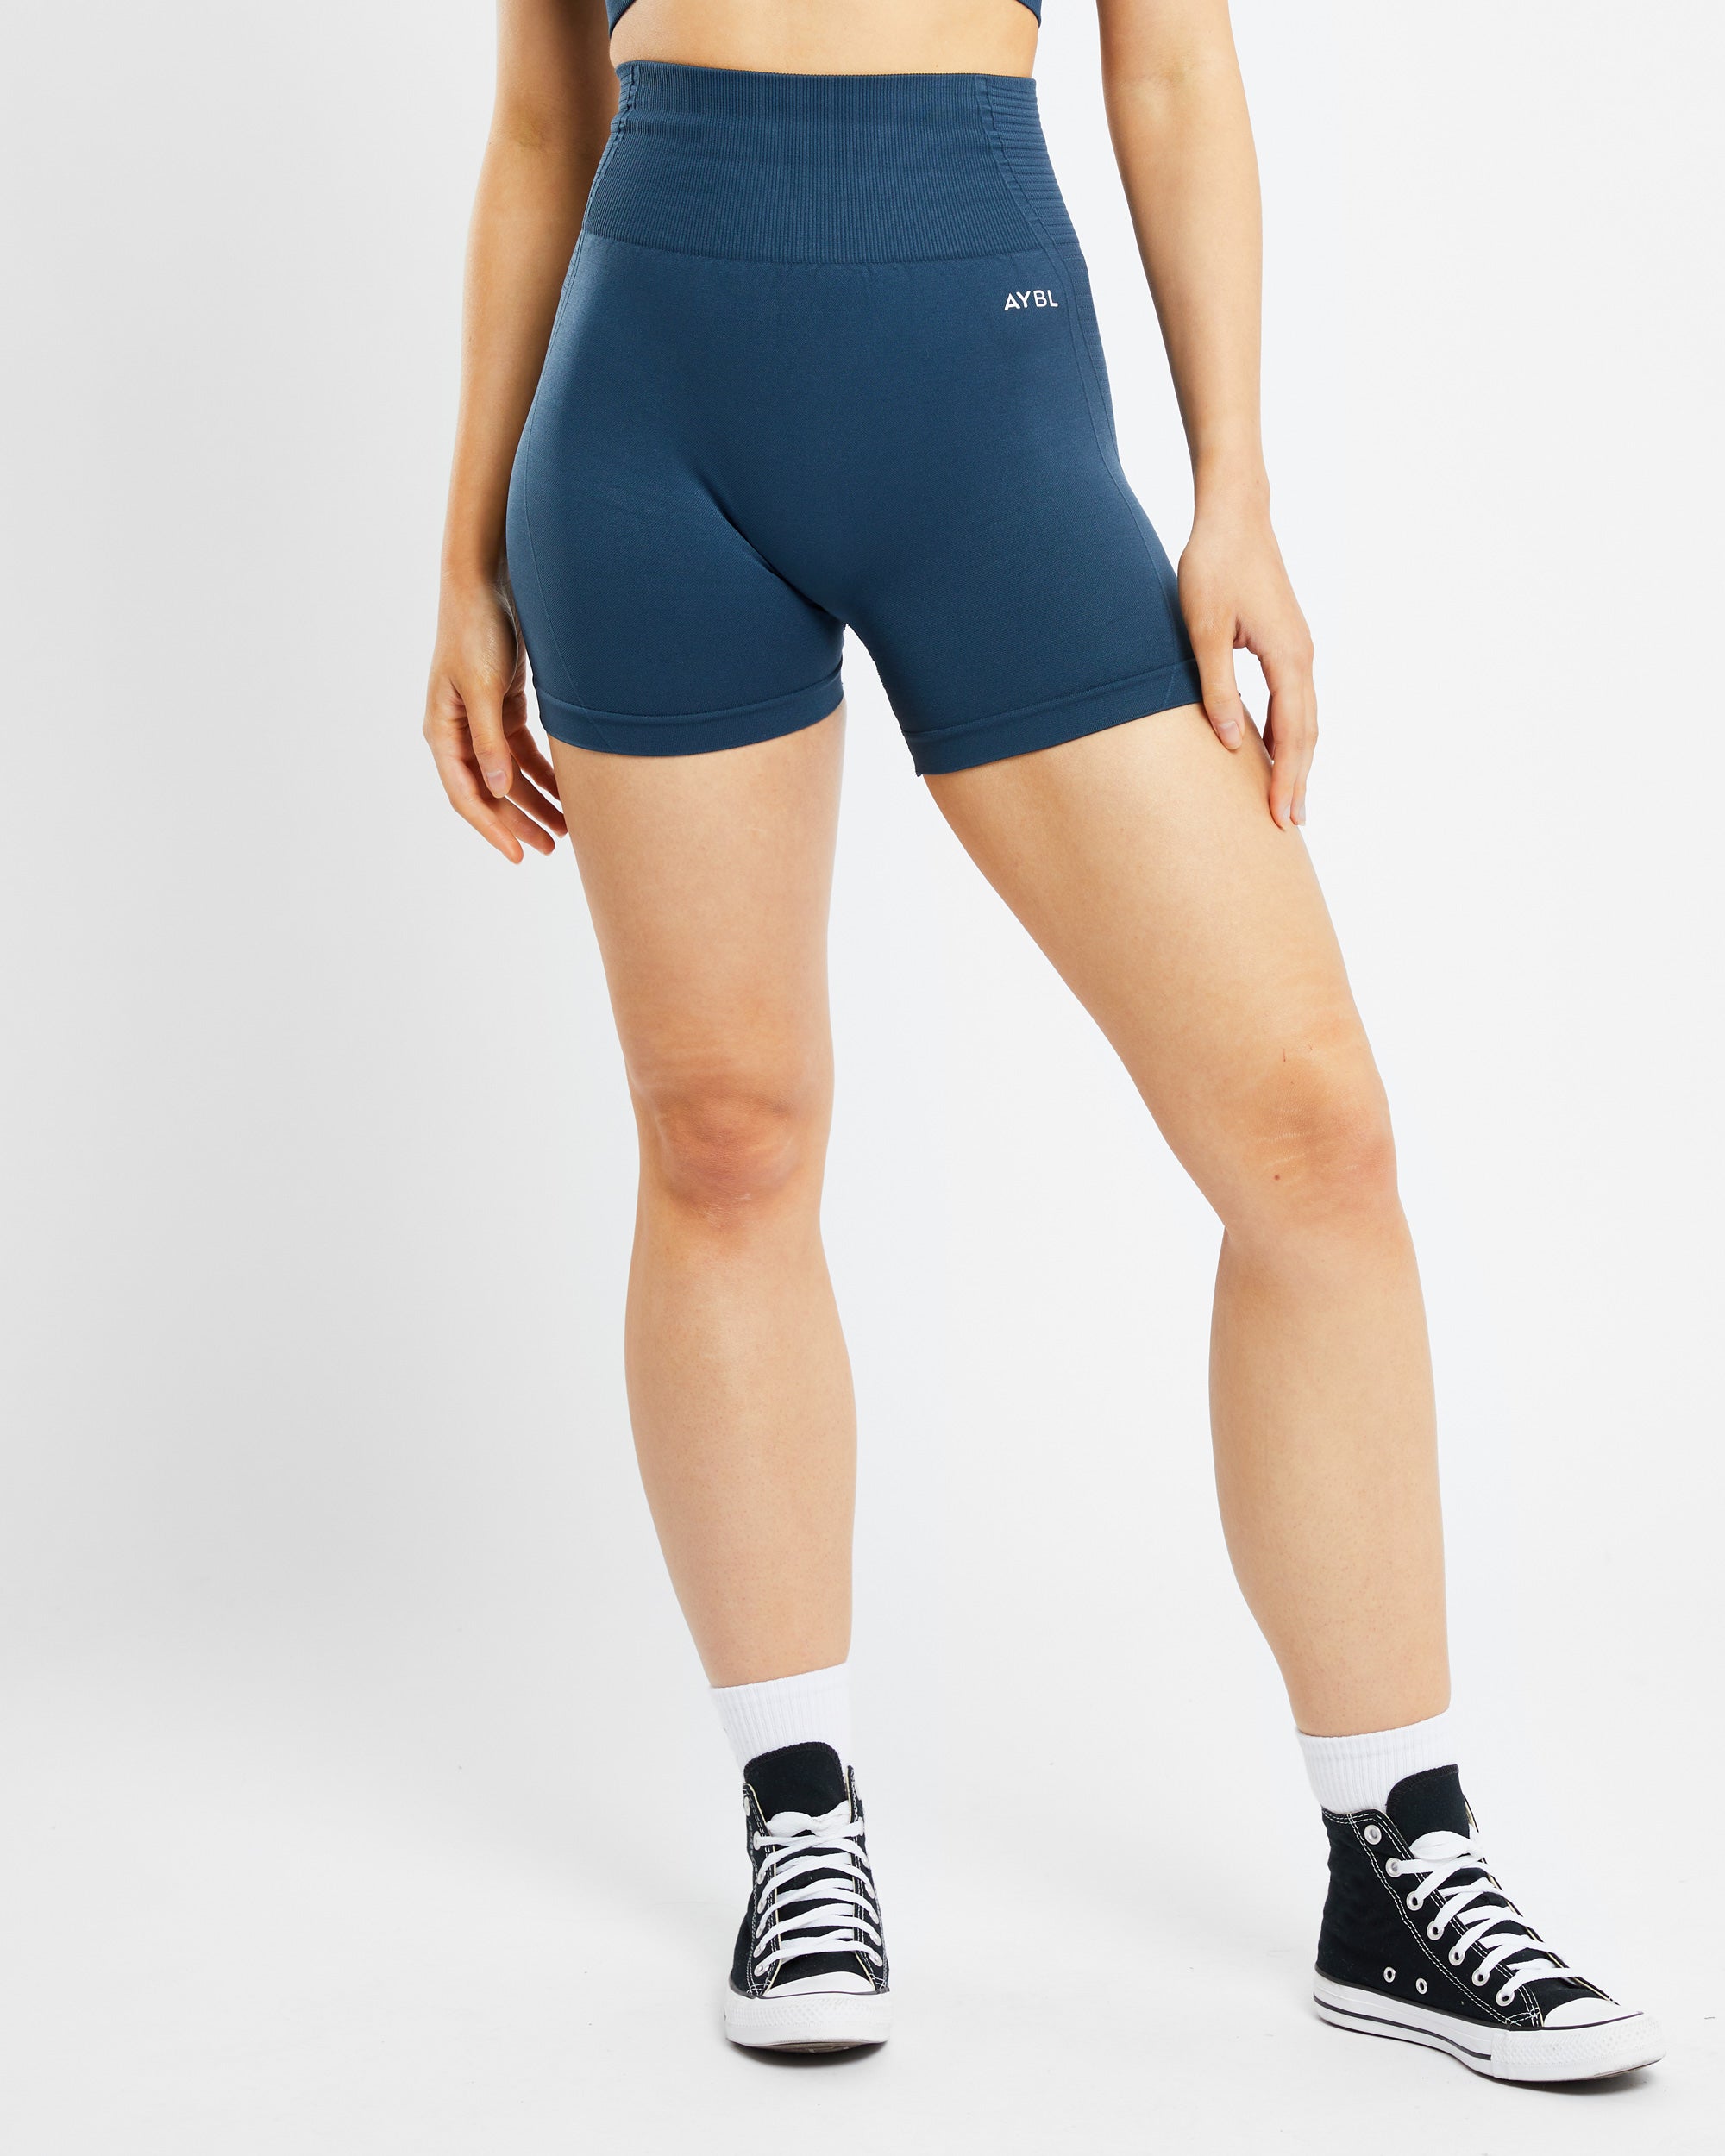 AYBL Black Seamless Shorts Size XS - $20 (33% Off Retail) - From Madison